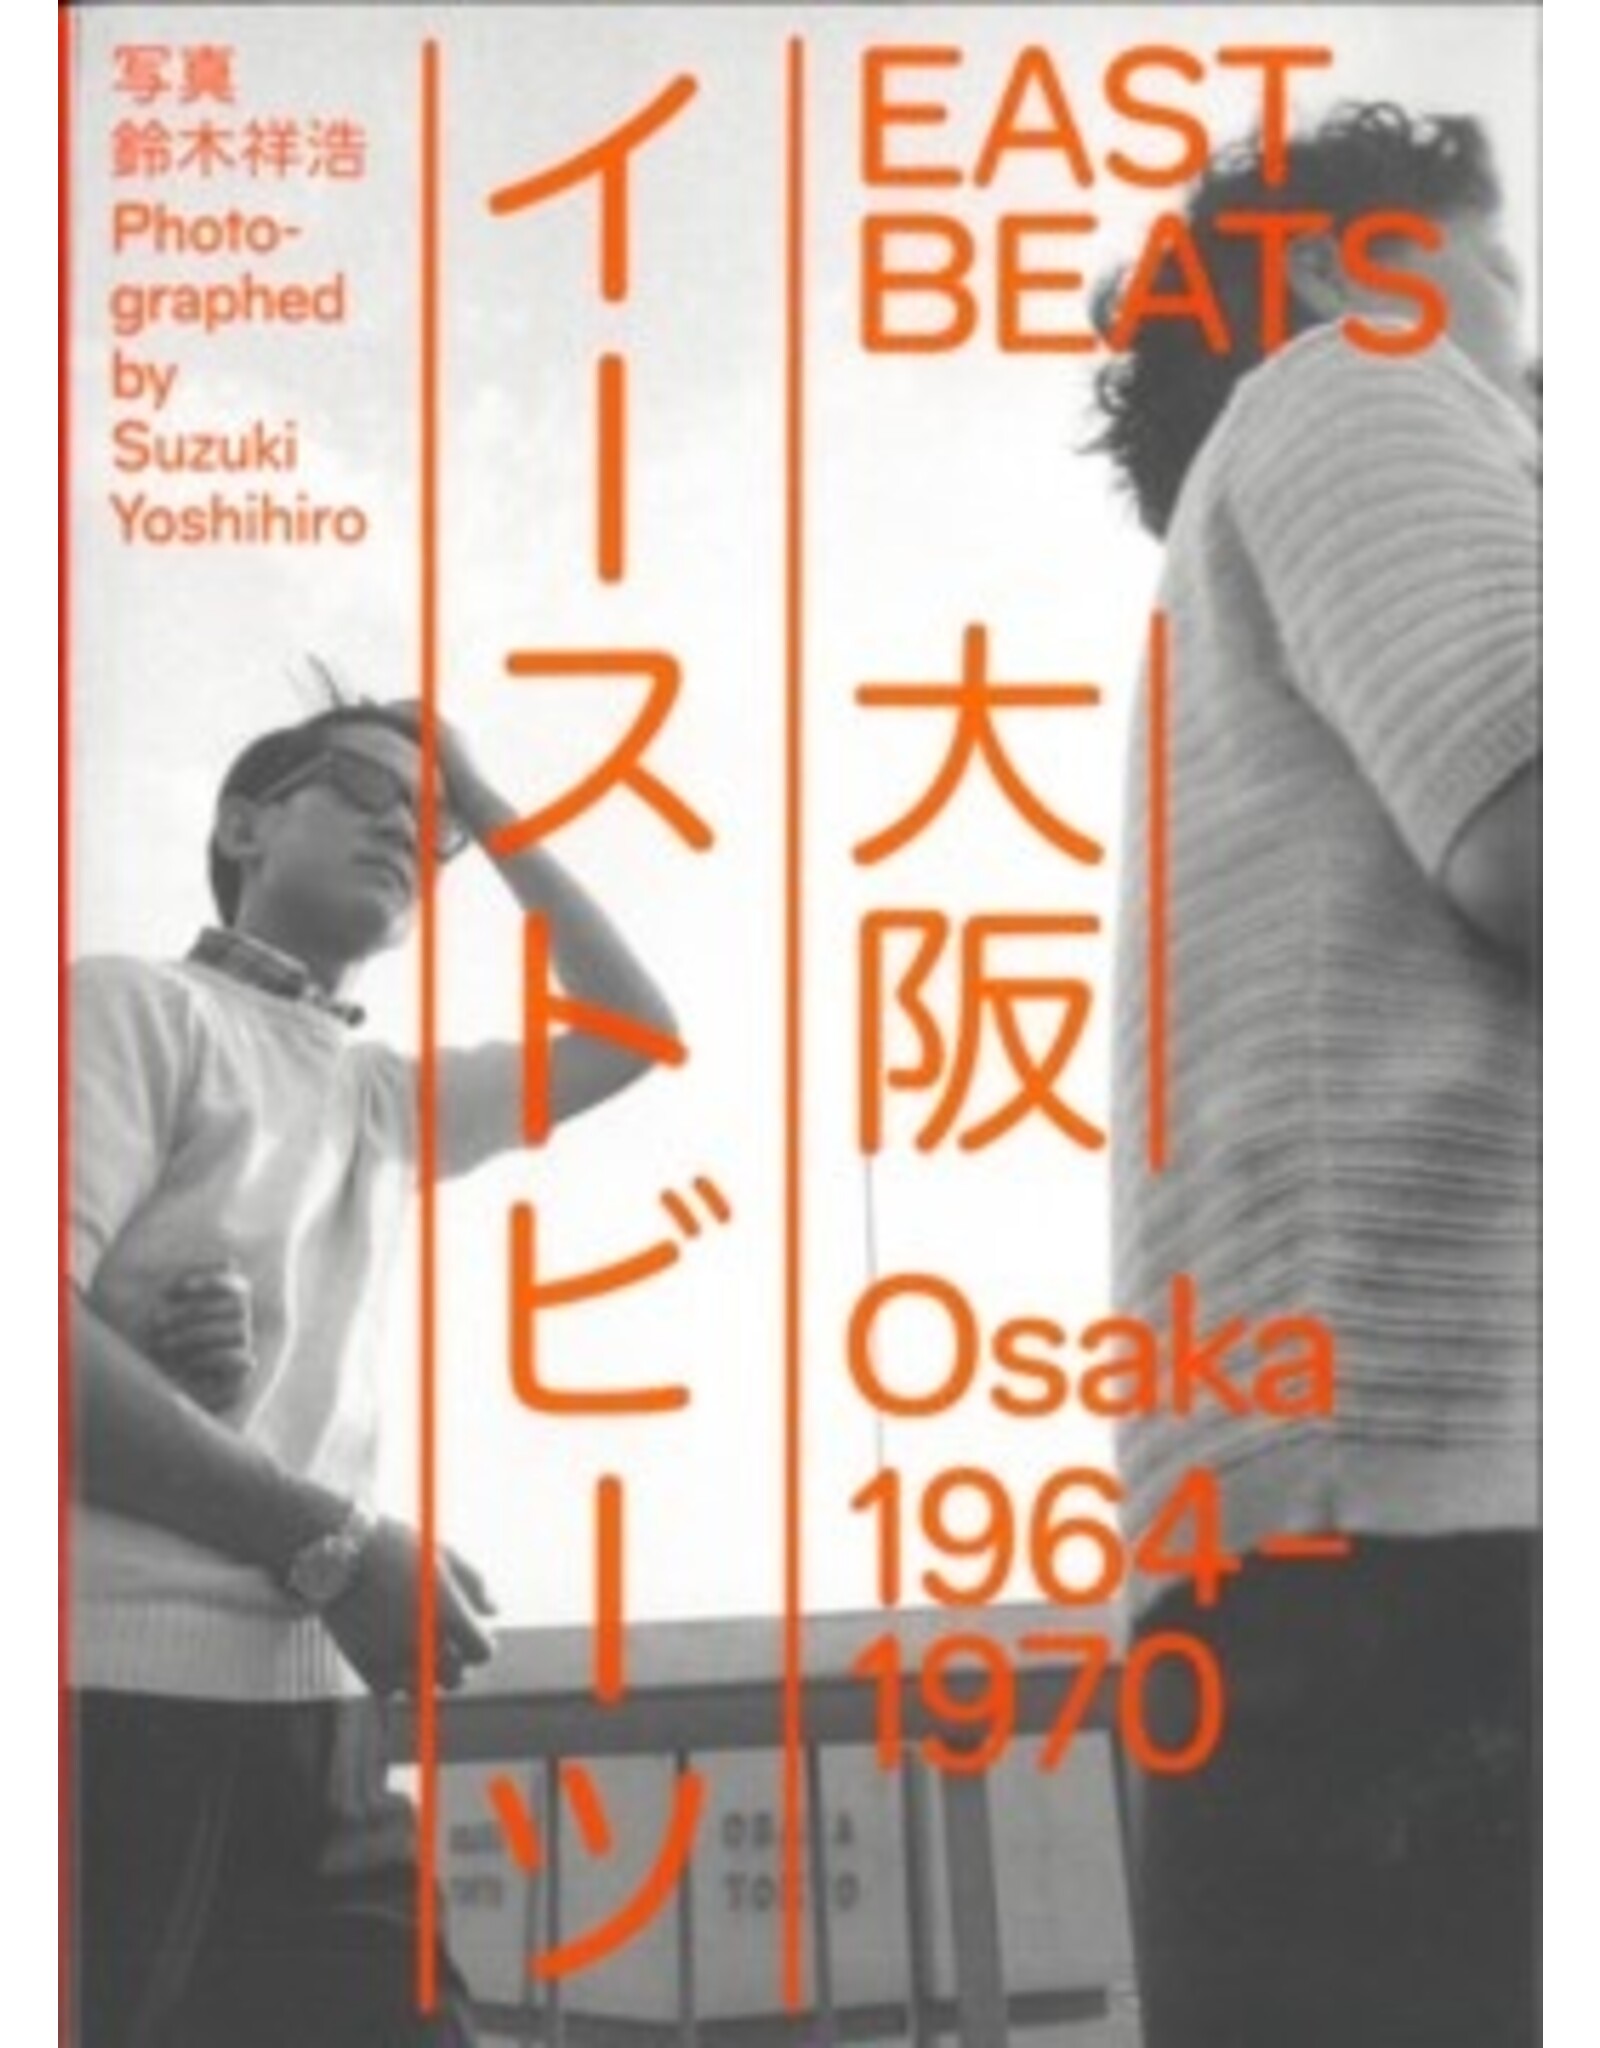 Yoshihiro Suzuki: Eastbeats. Osaka 1964 – 1970